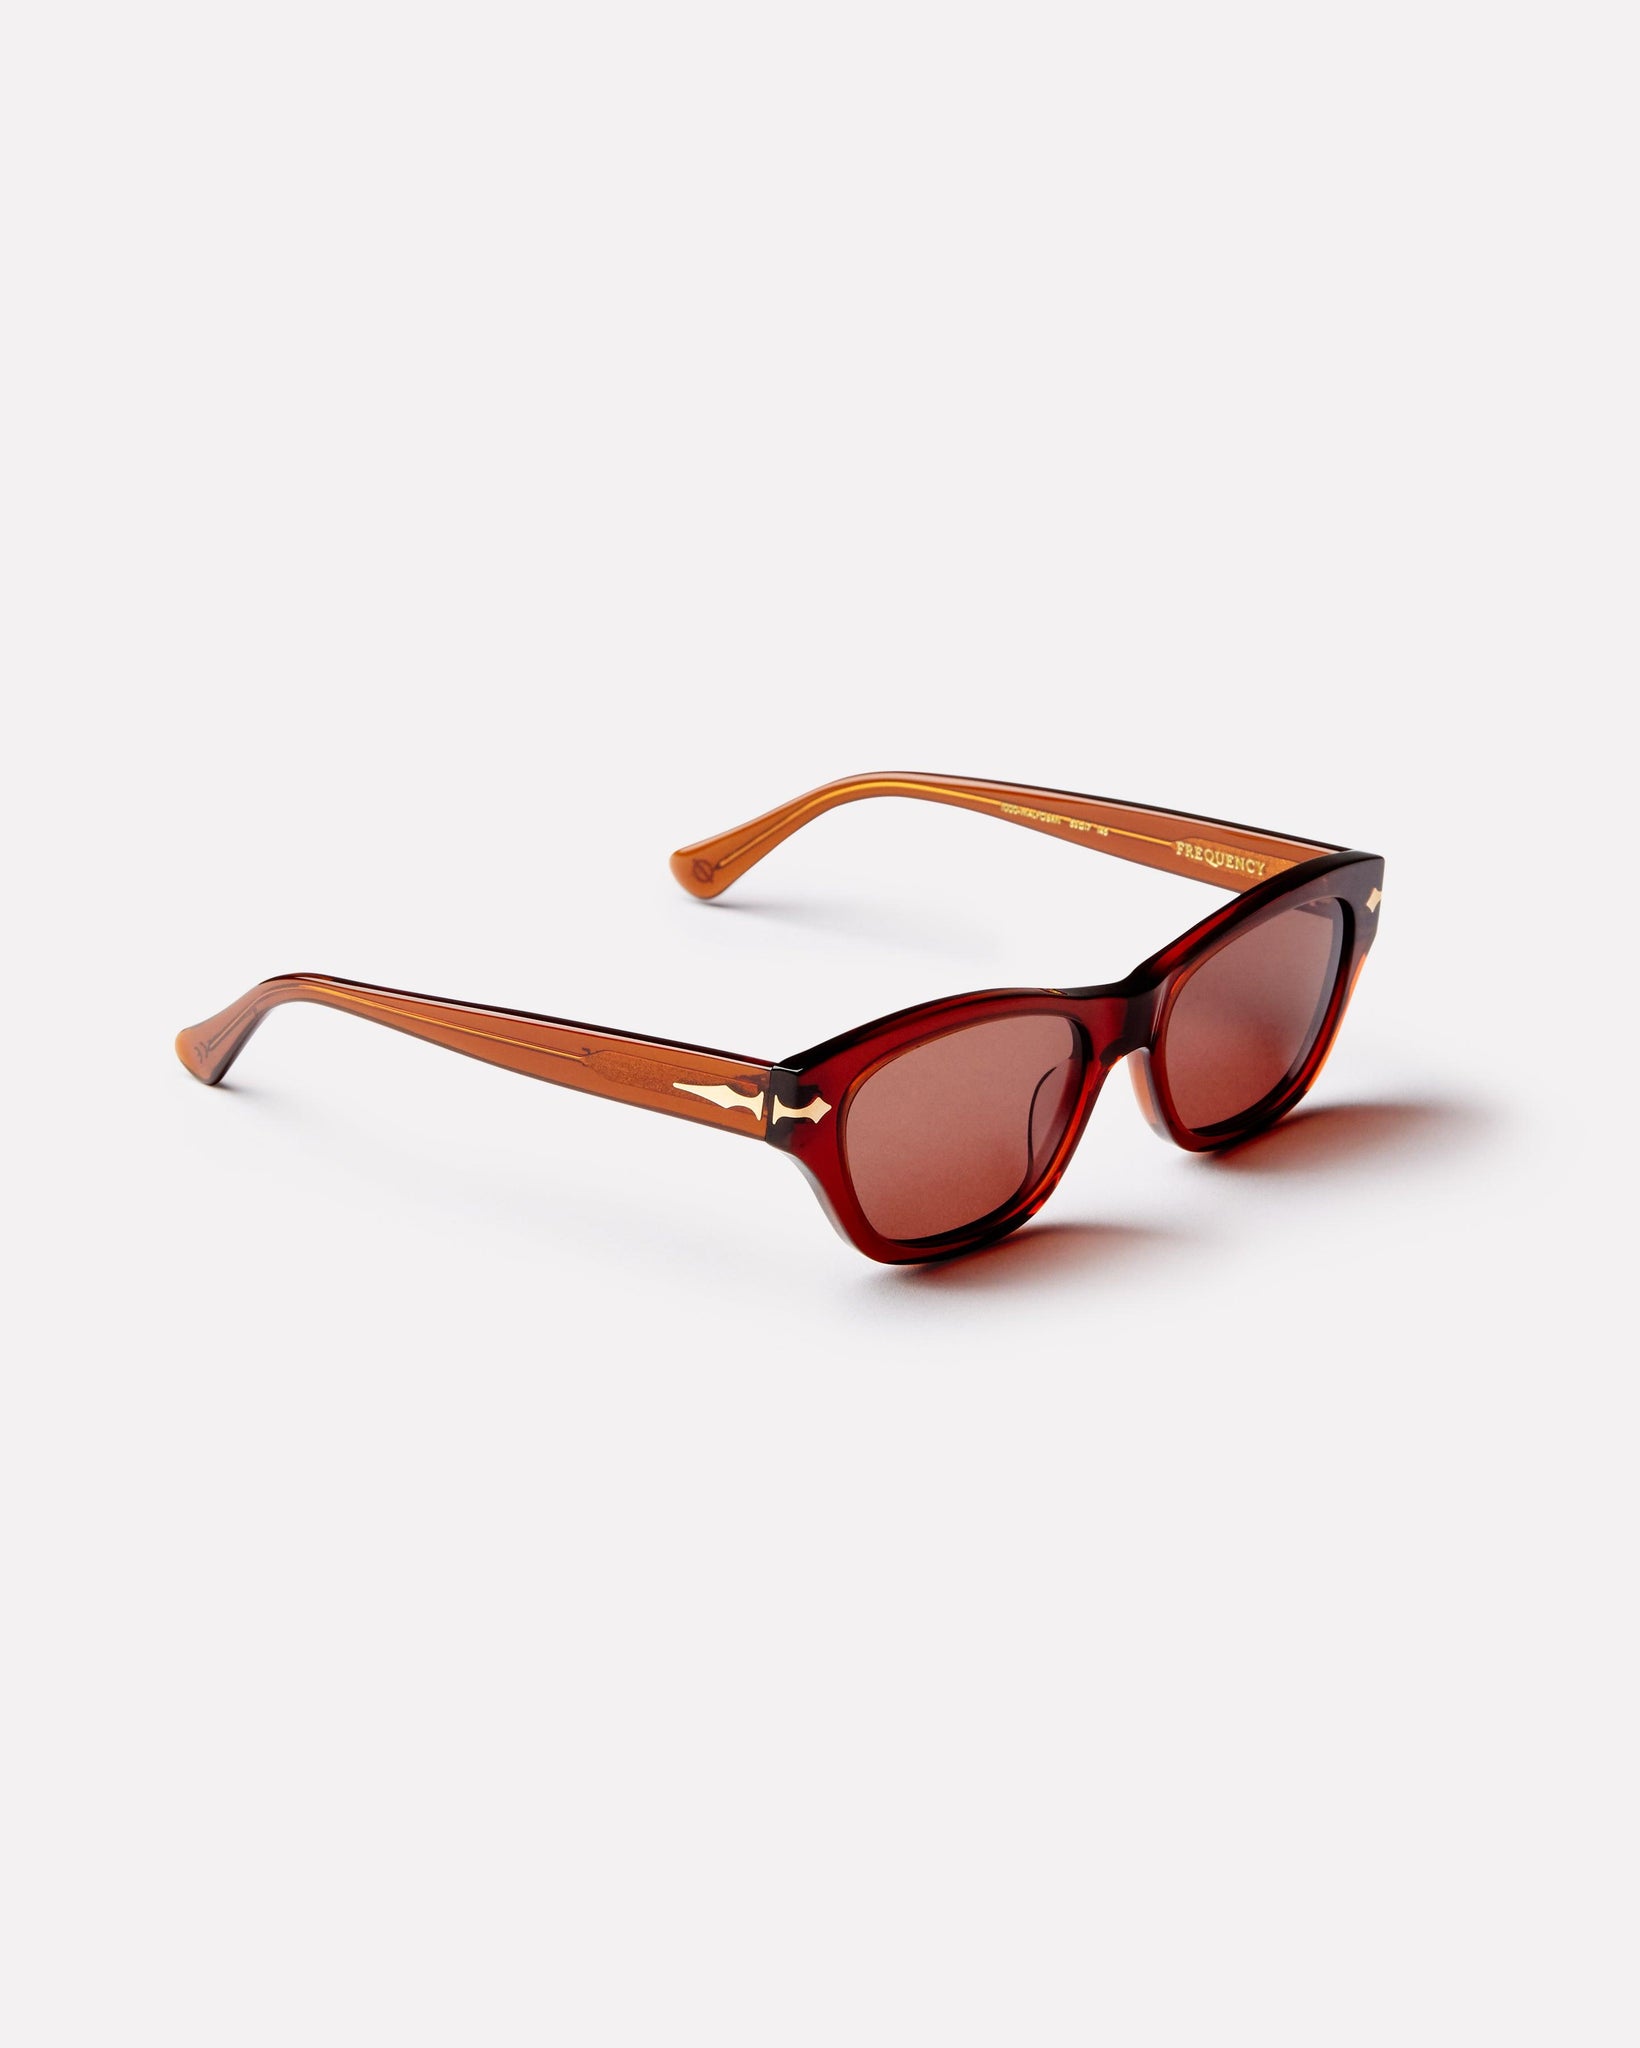 Frequency - Maple Polished / Brown - Sunglasses - EPOKHE EYEWEAR